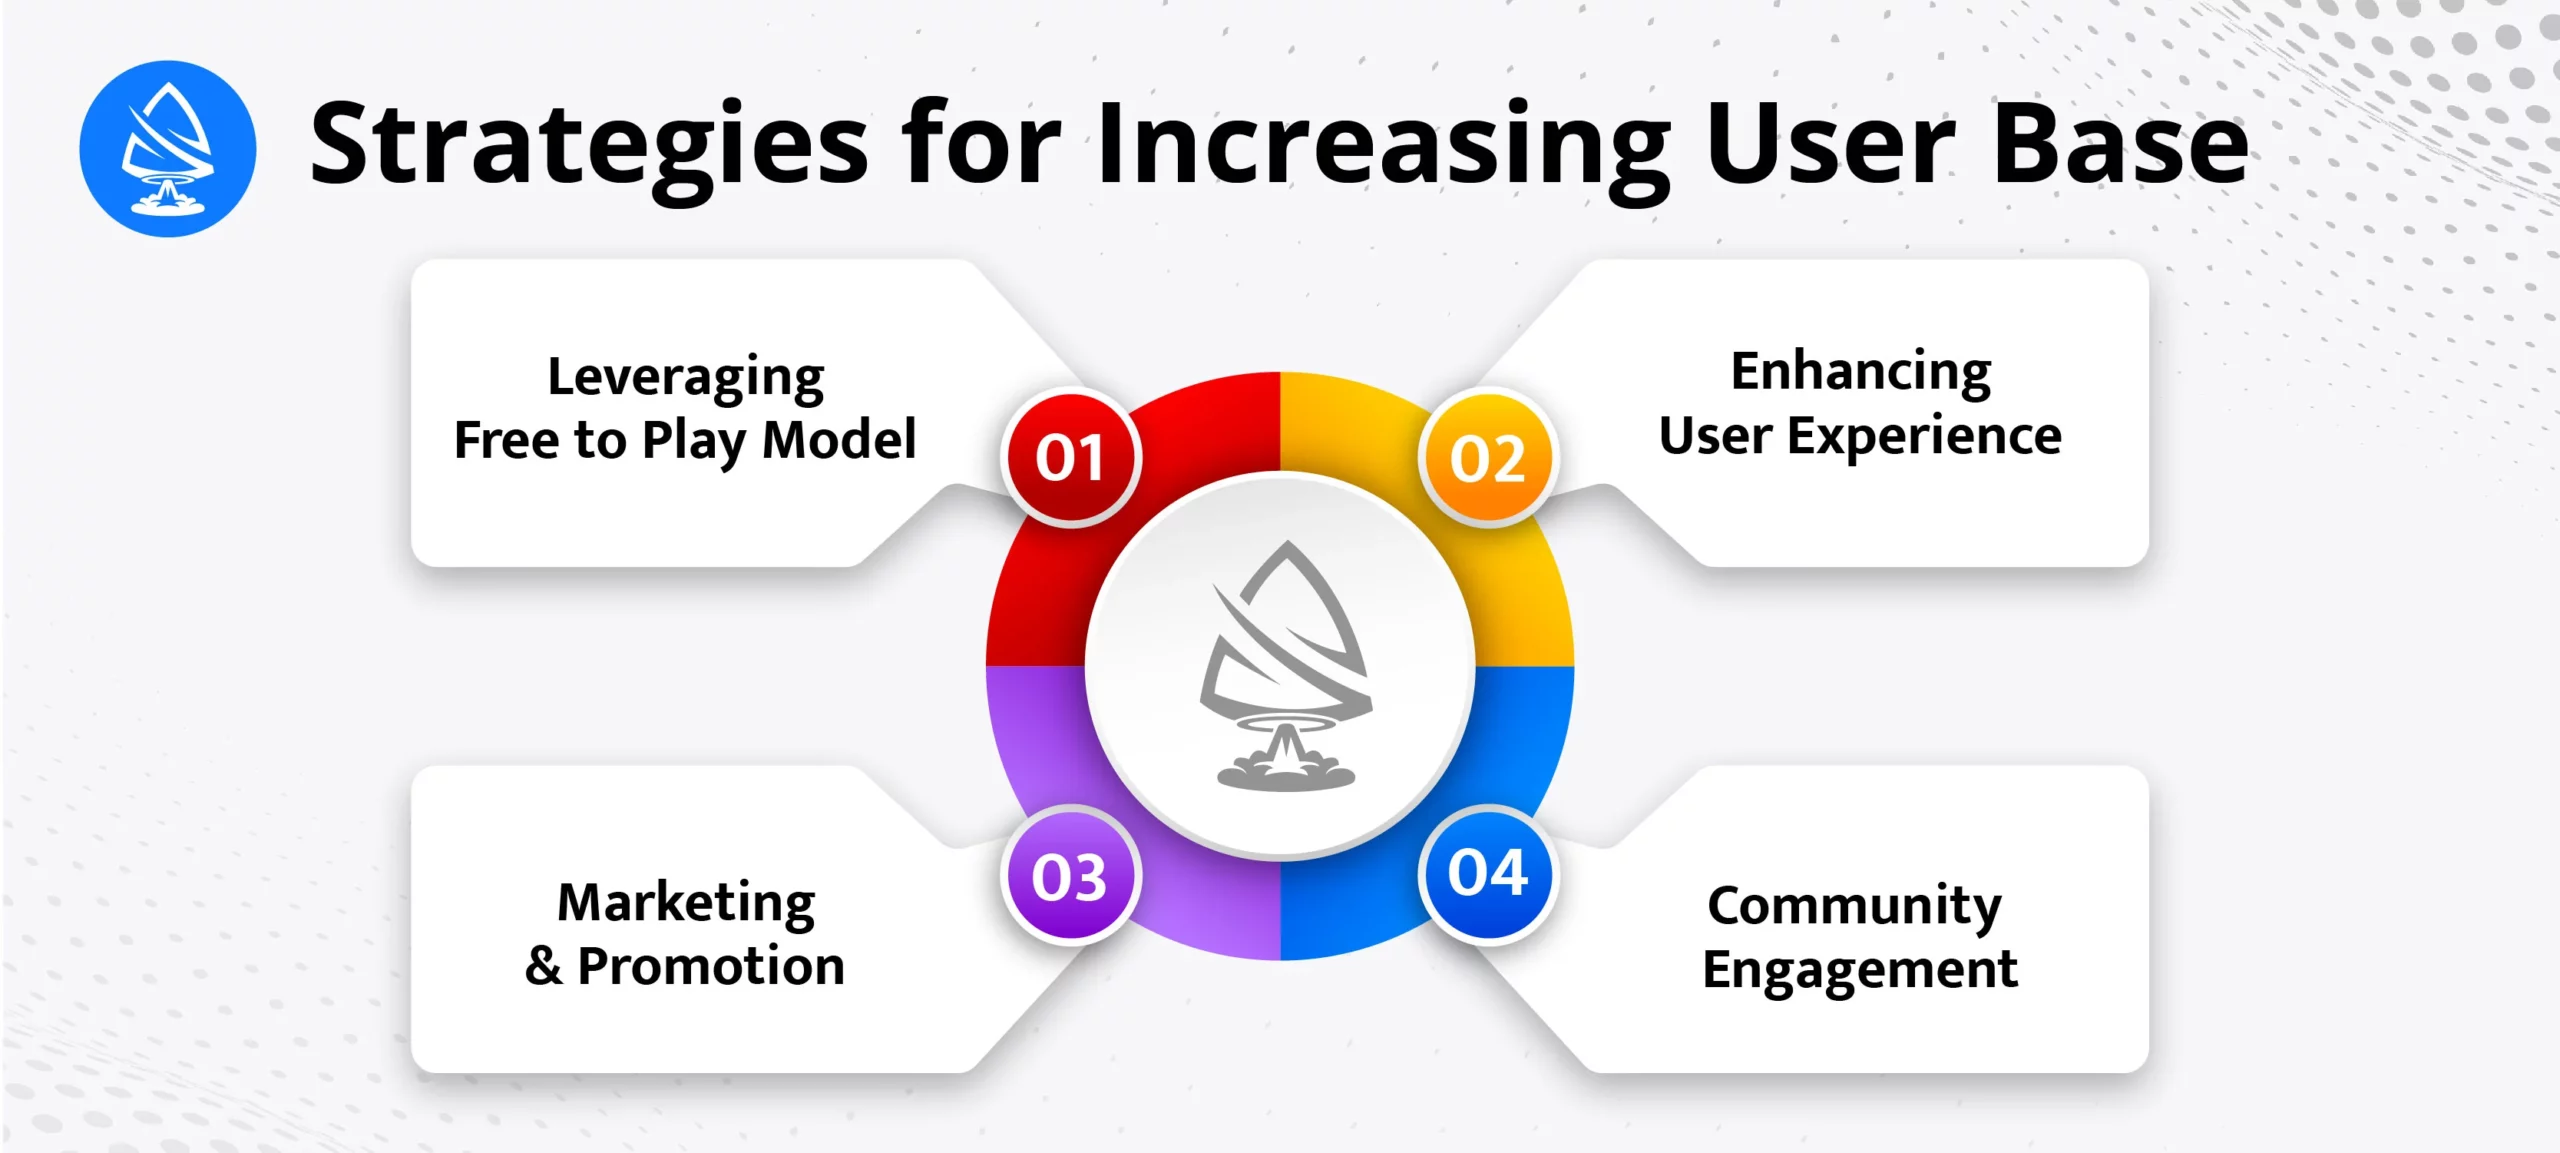 Strategies for Increasing User Base